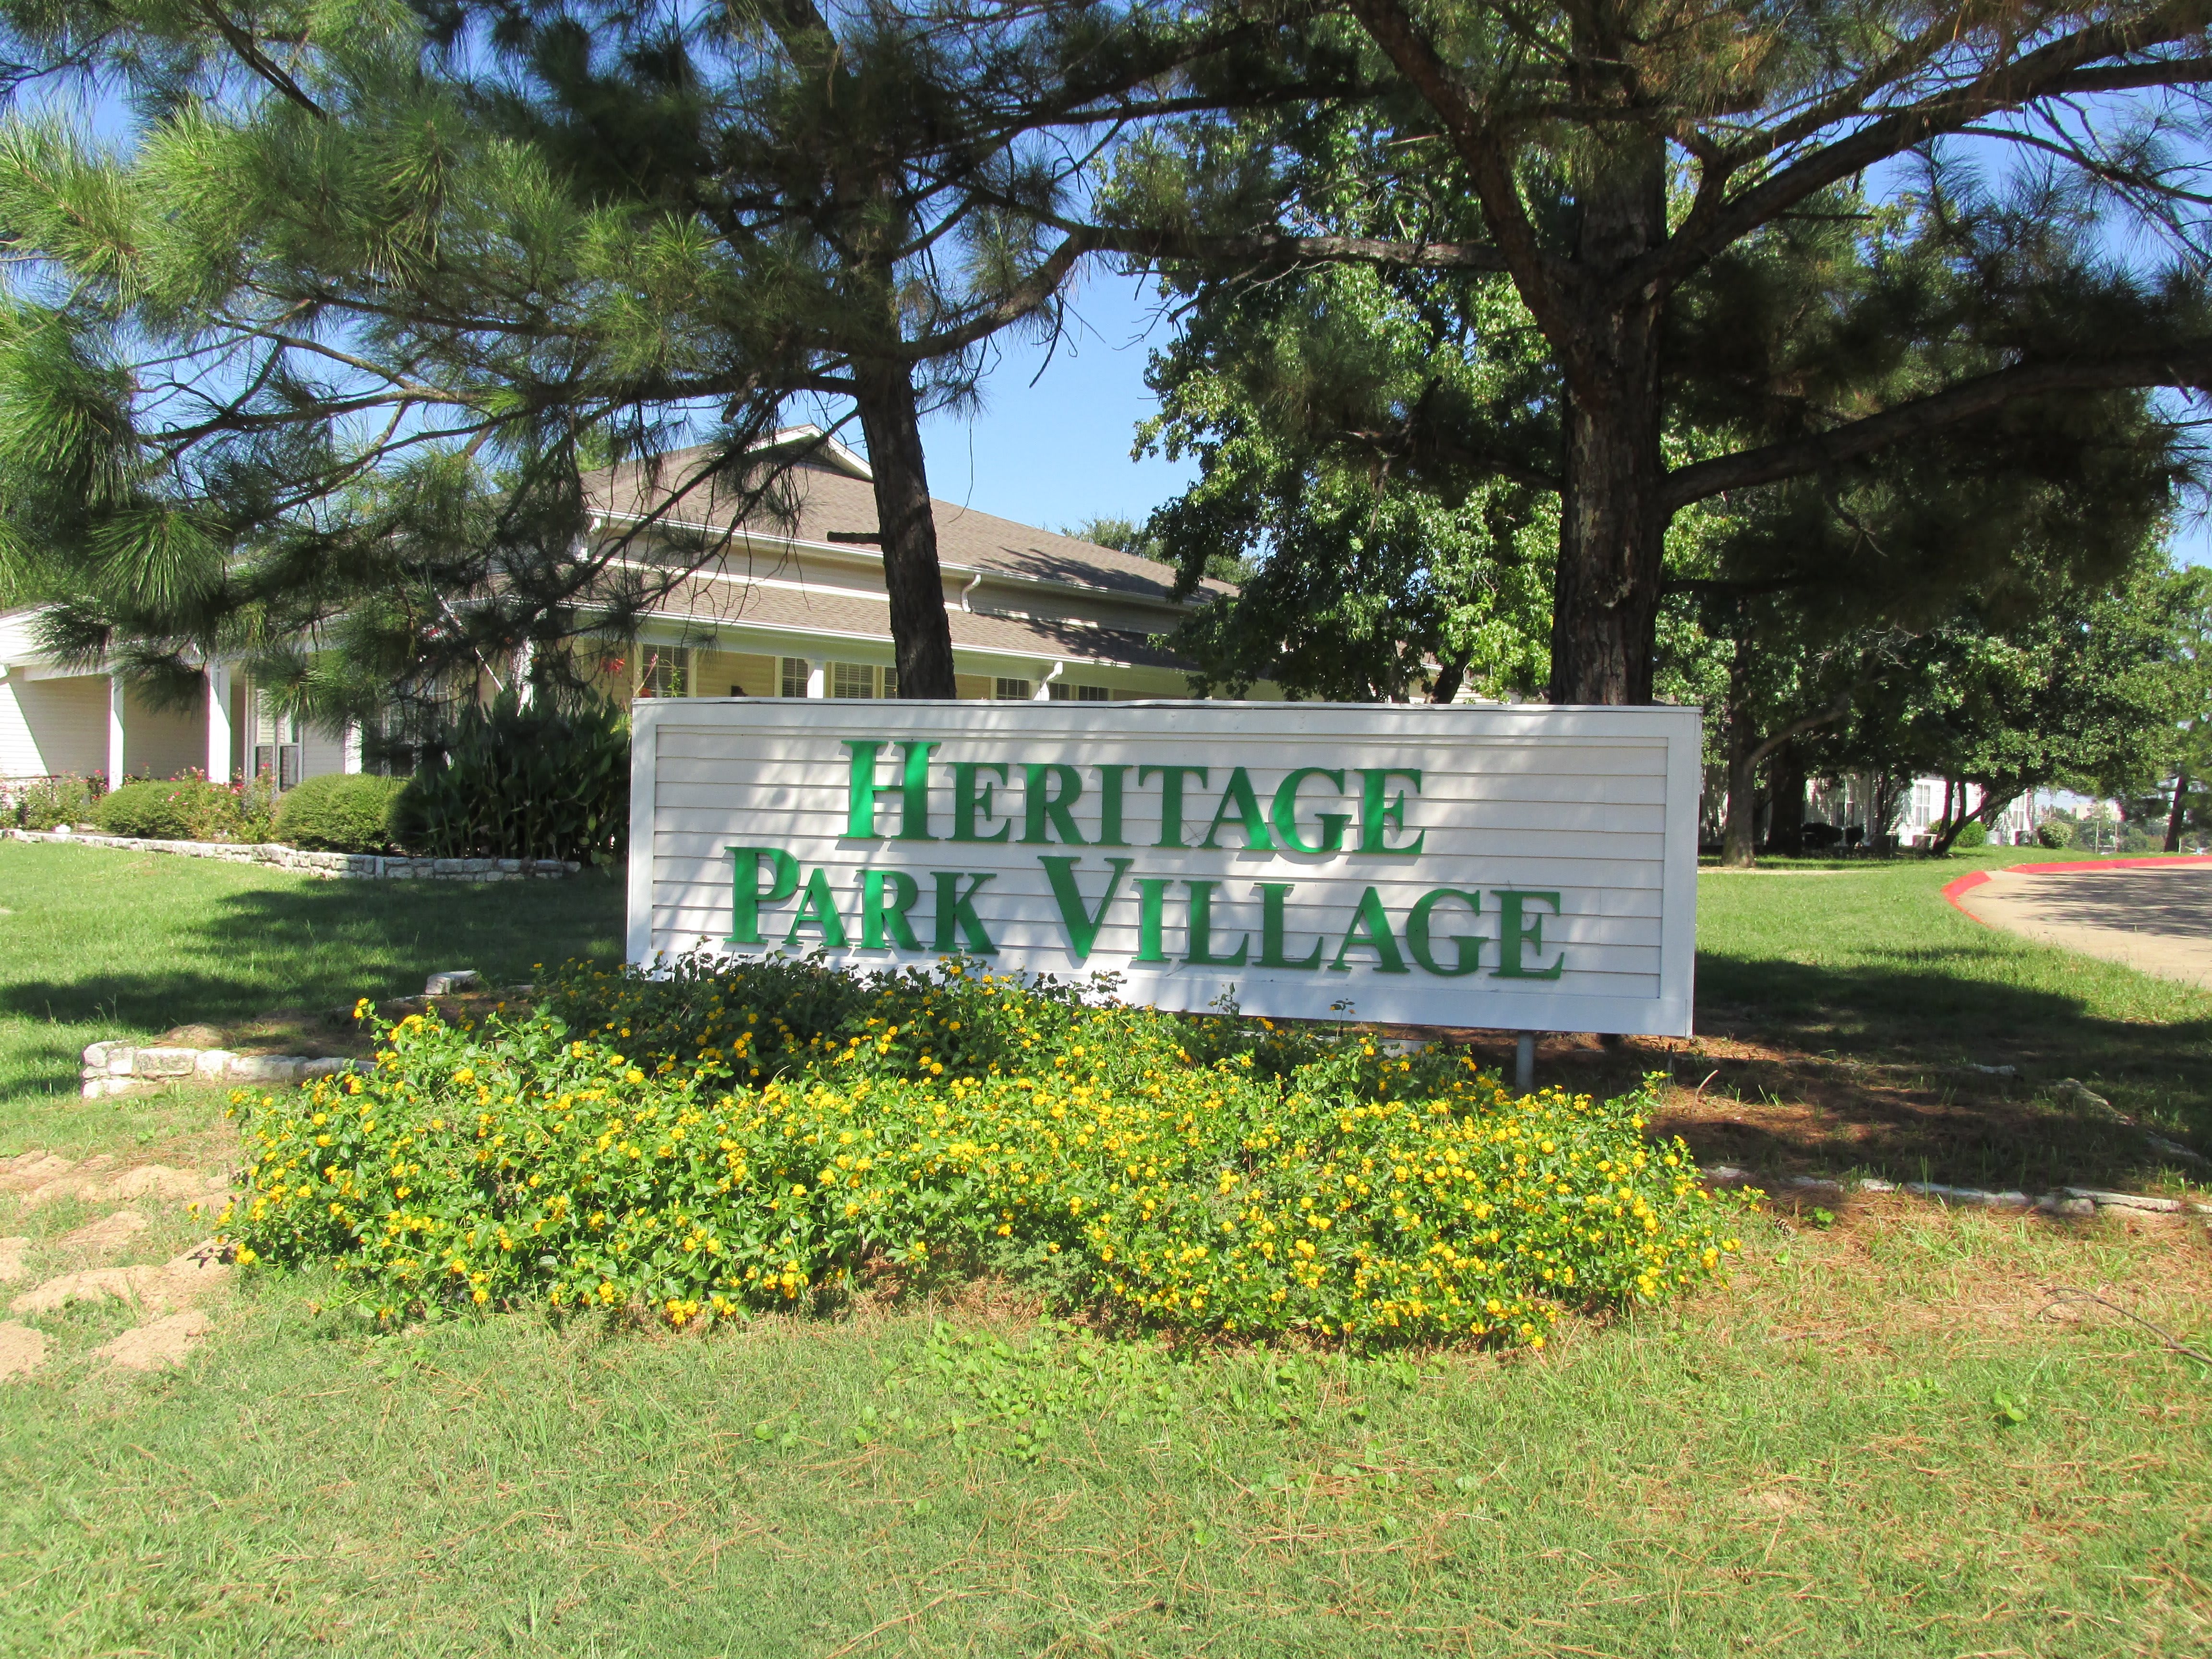 Heritage Park Village community exterior